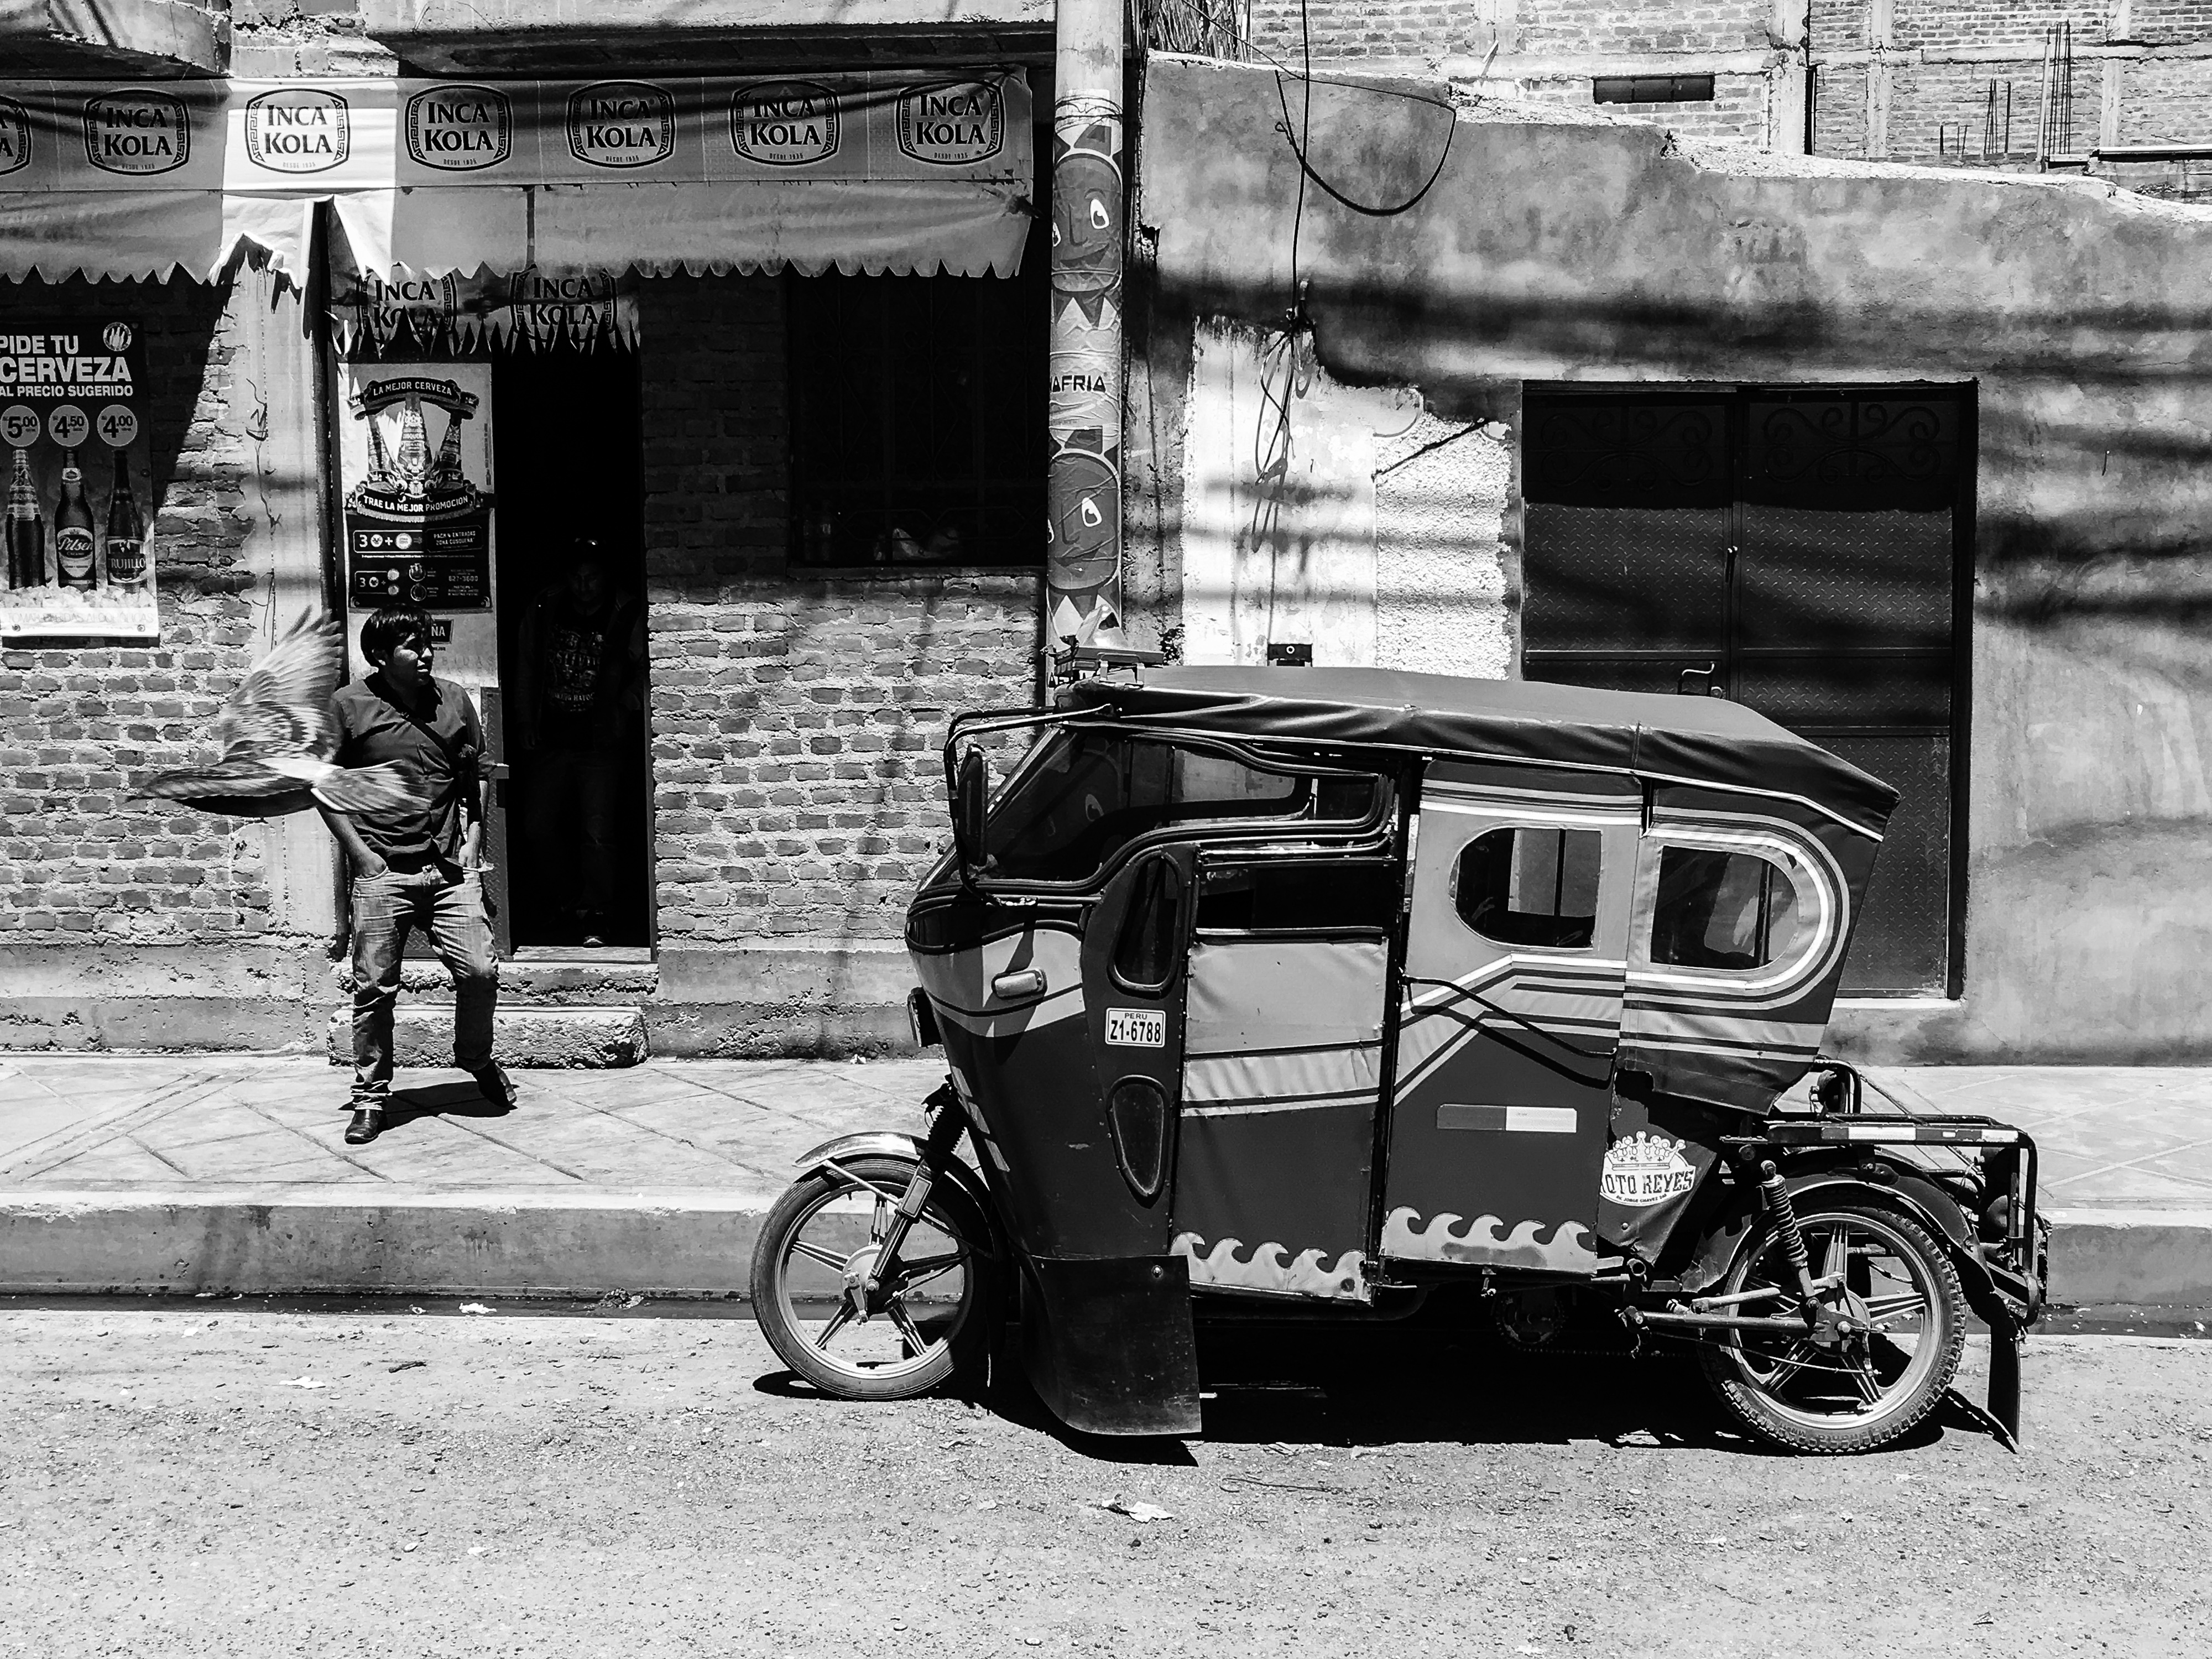 STREET PHOTOGRAPHY IN PERU